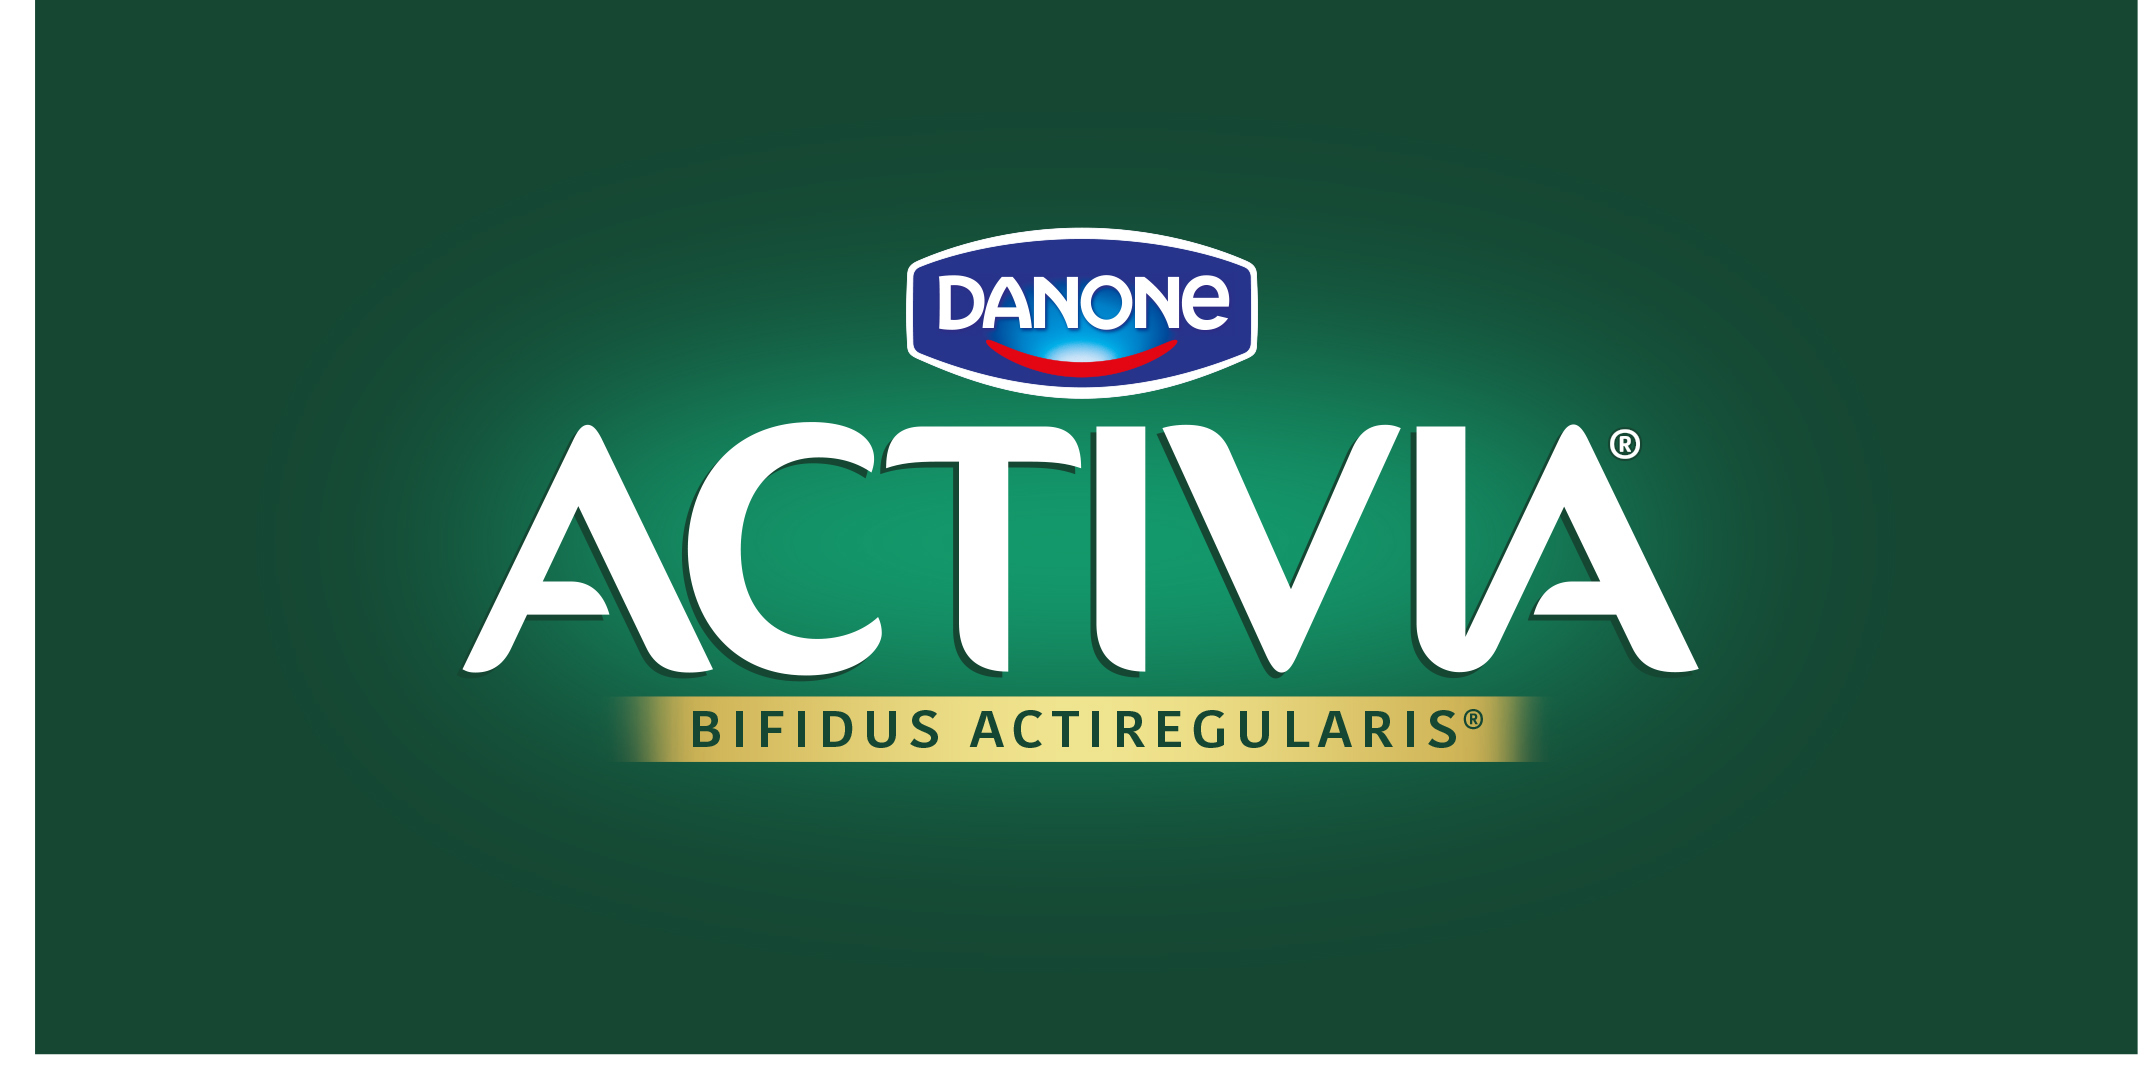 Actyva Logo photo - 1